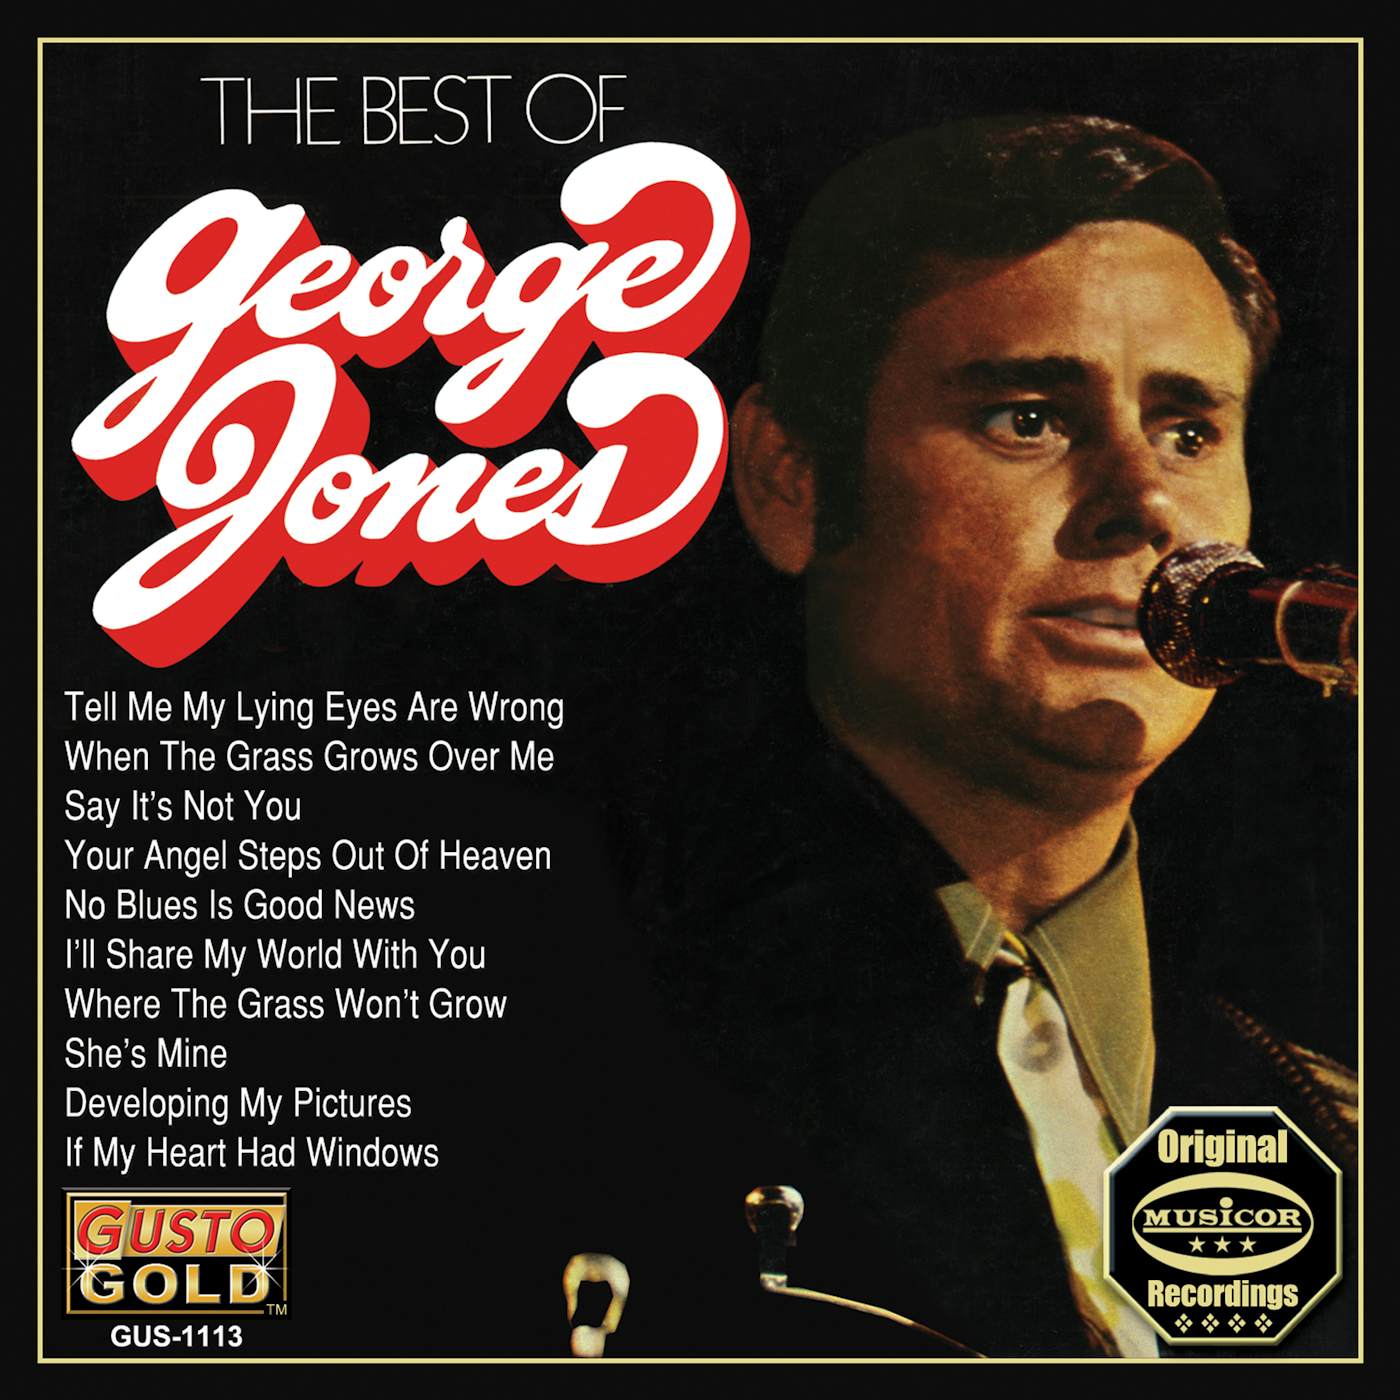 BEST OF GEORGE JONES CD